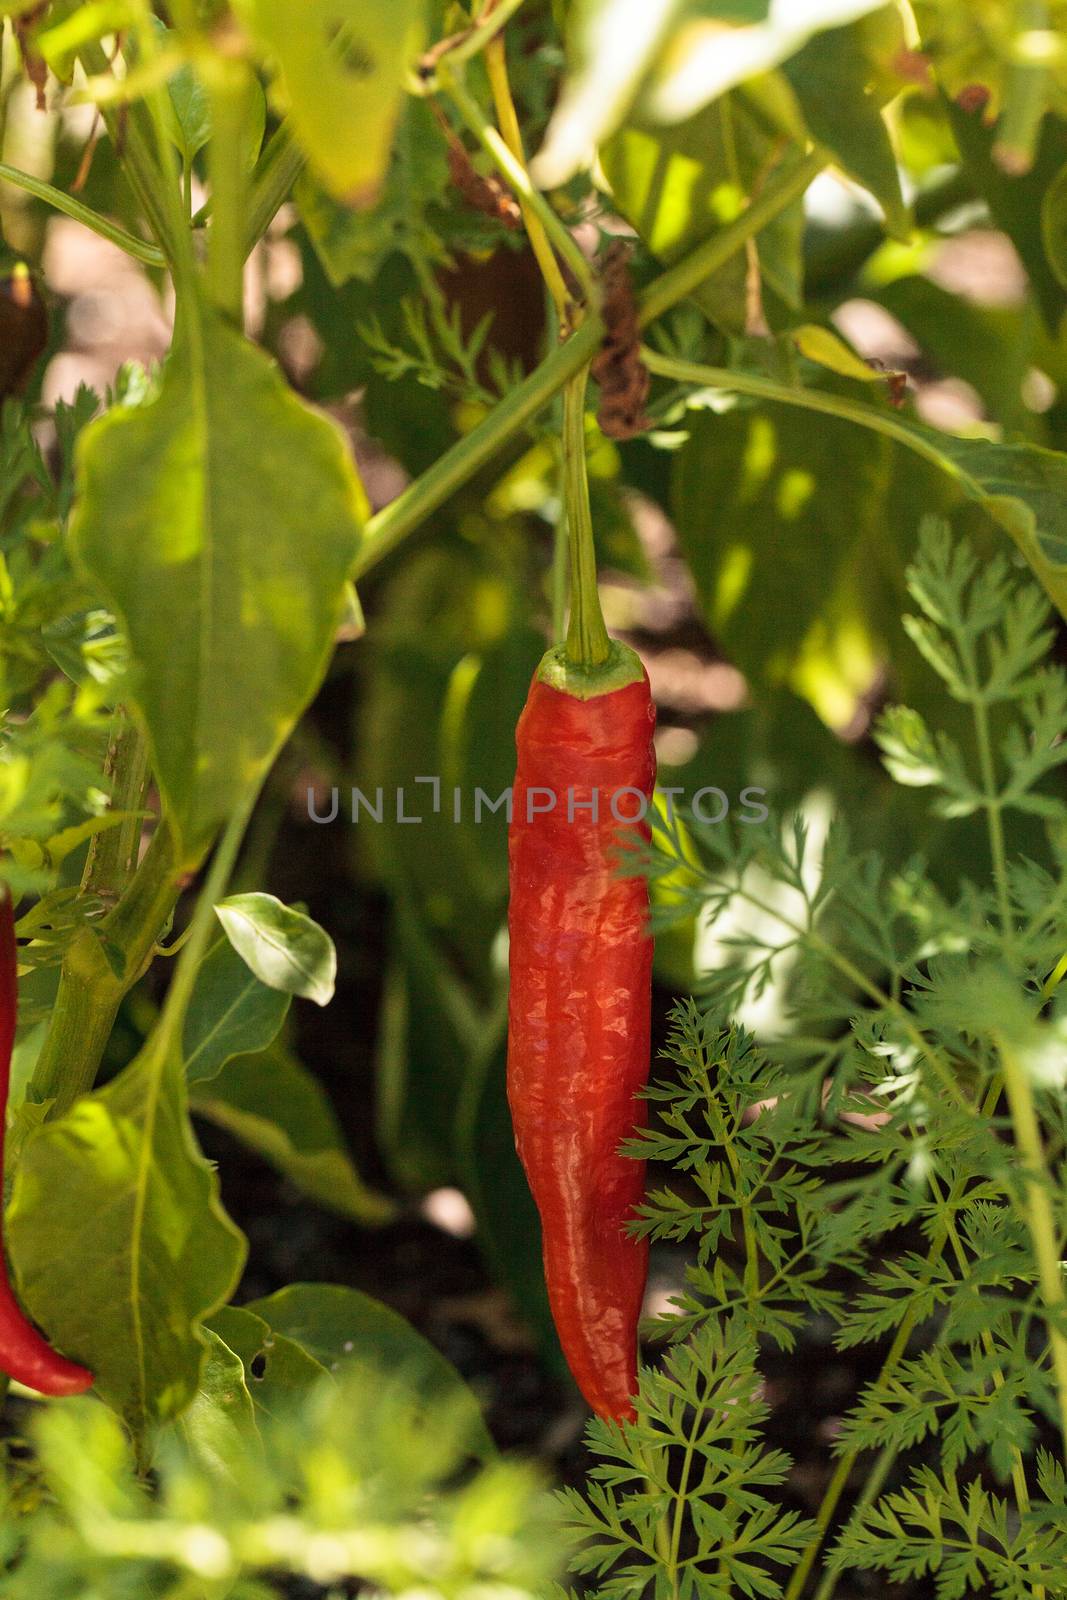 Cheyenne pepper hybrid in an organic vegetable garden by steffstarr